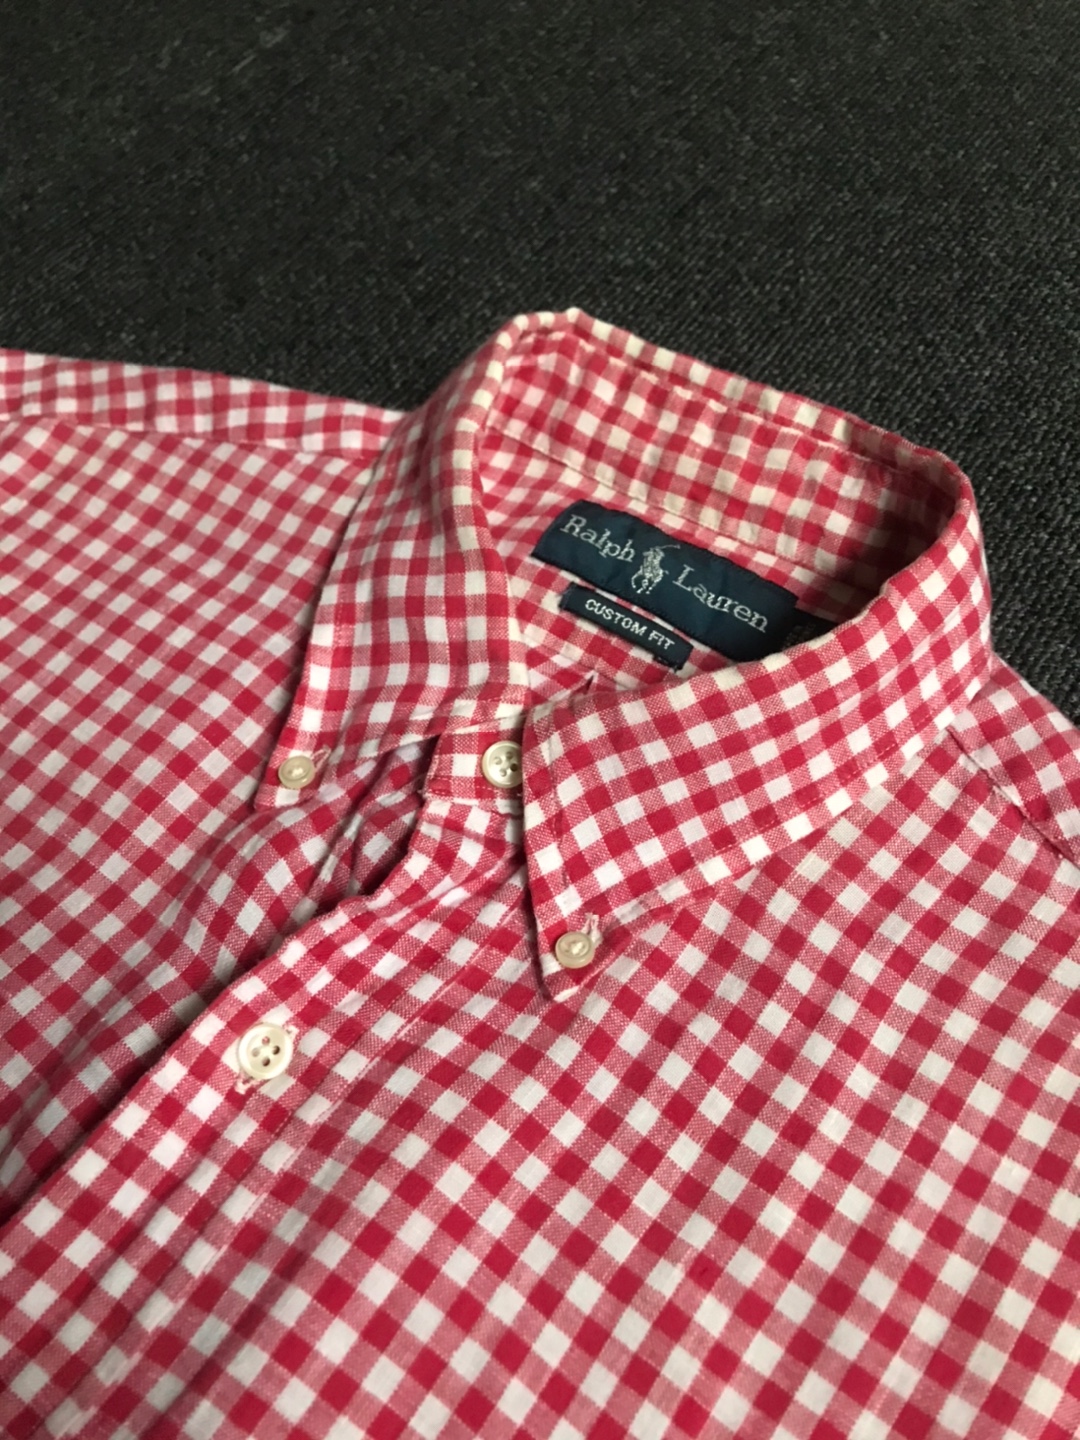 Polo RL linen gingham check bd shirt (M size, ~103 추천)